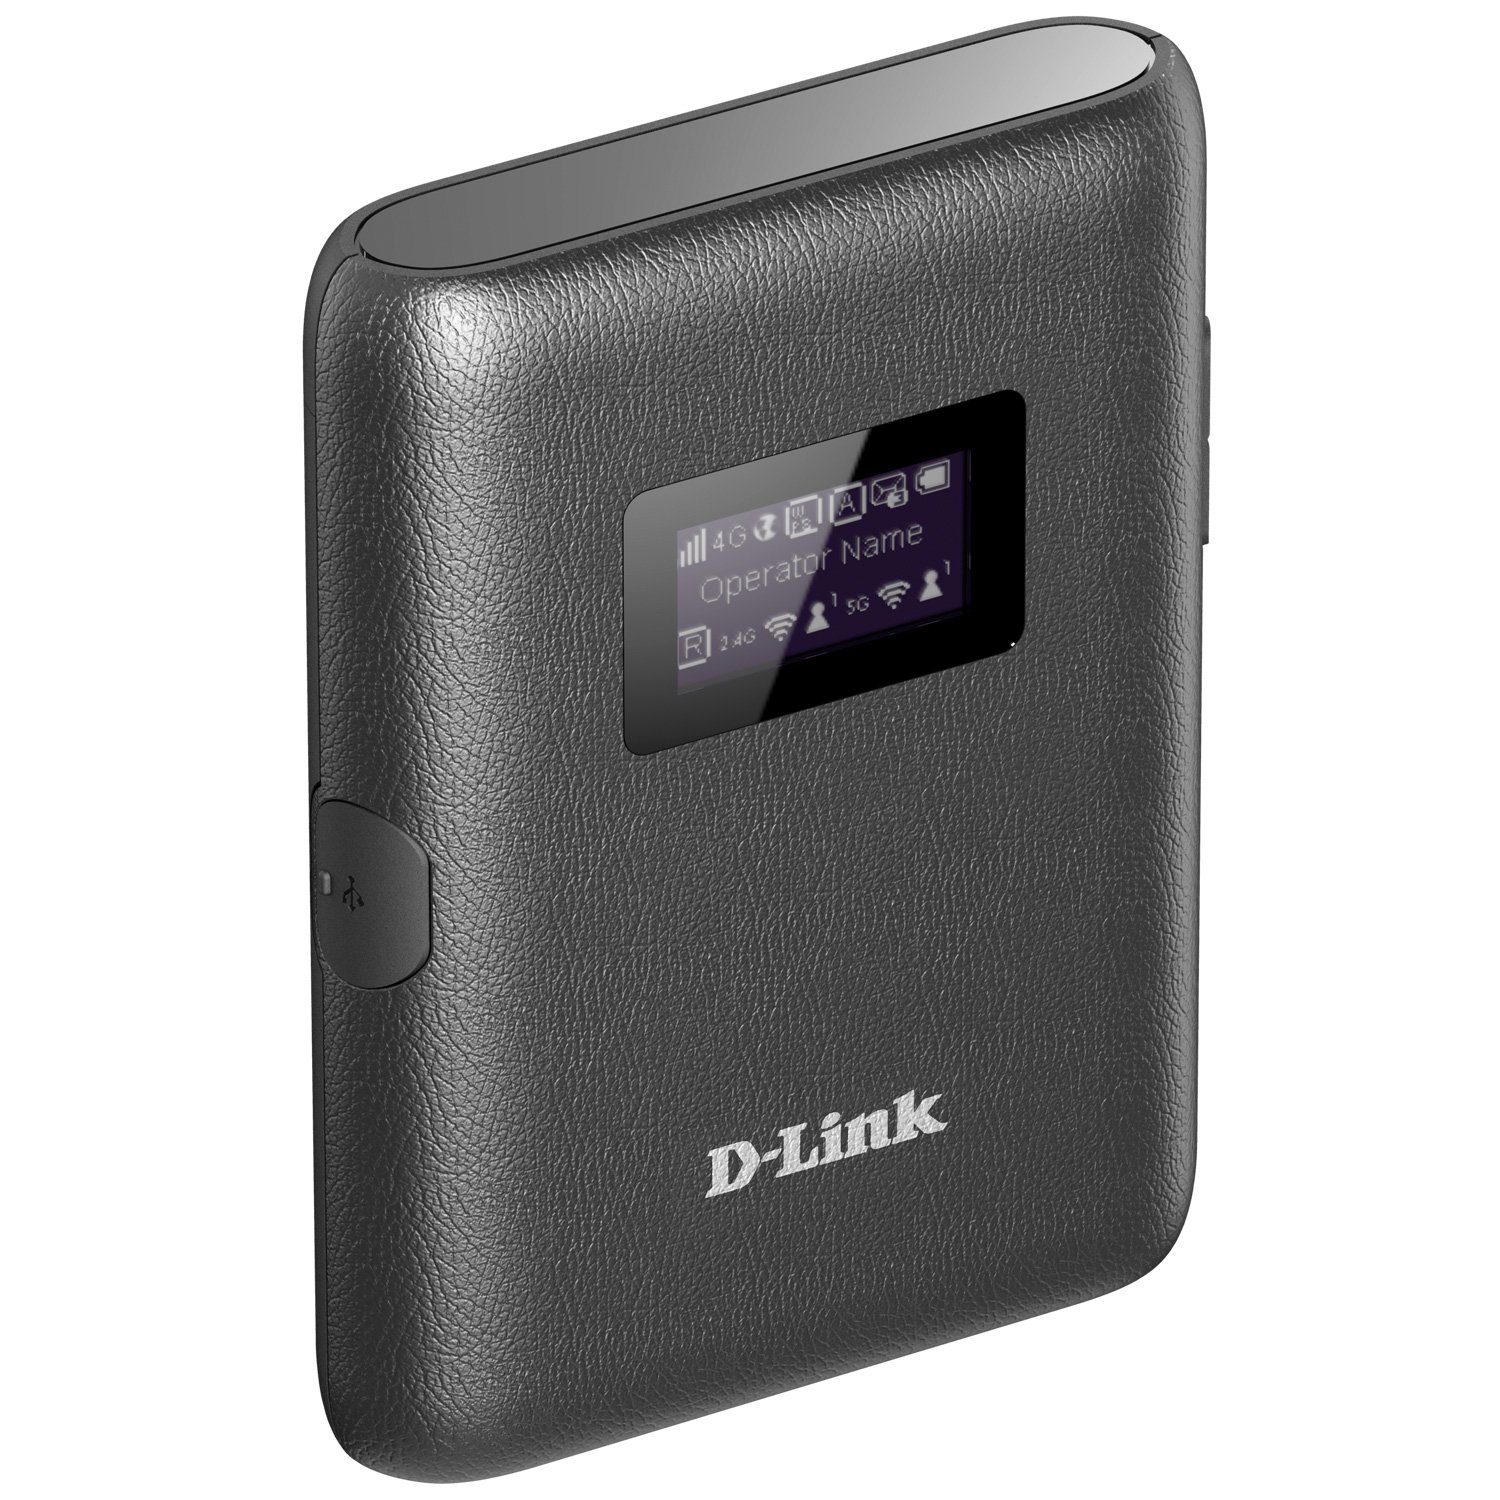 D-Link DWR-933 4G/LTE cat6 WiFi Hotspot 300Mbps